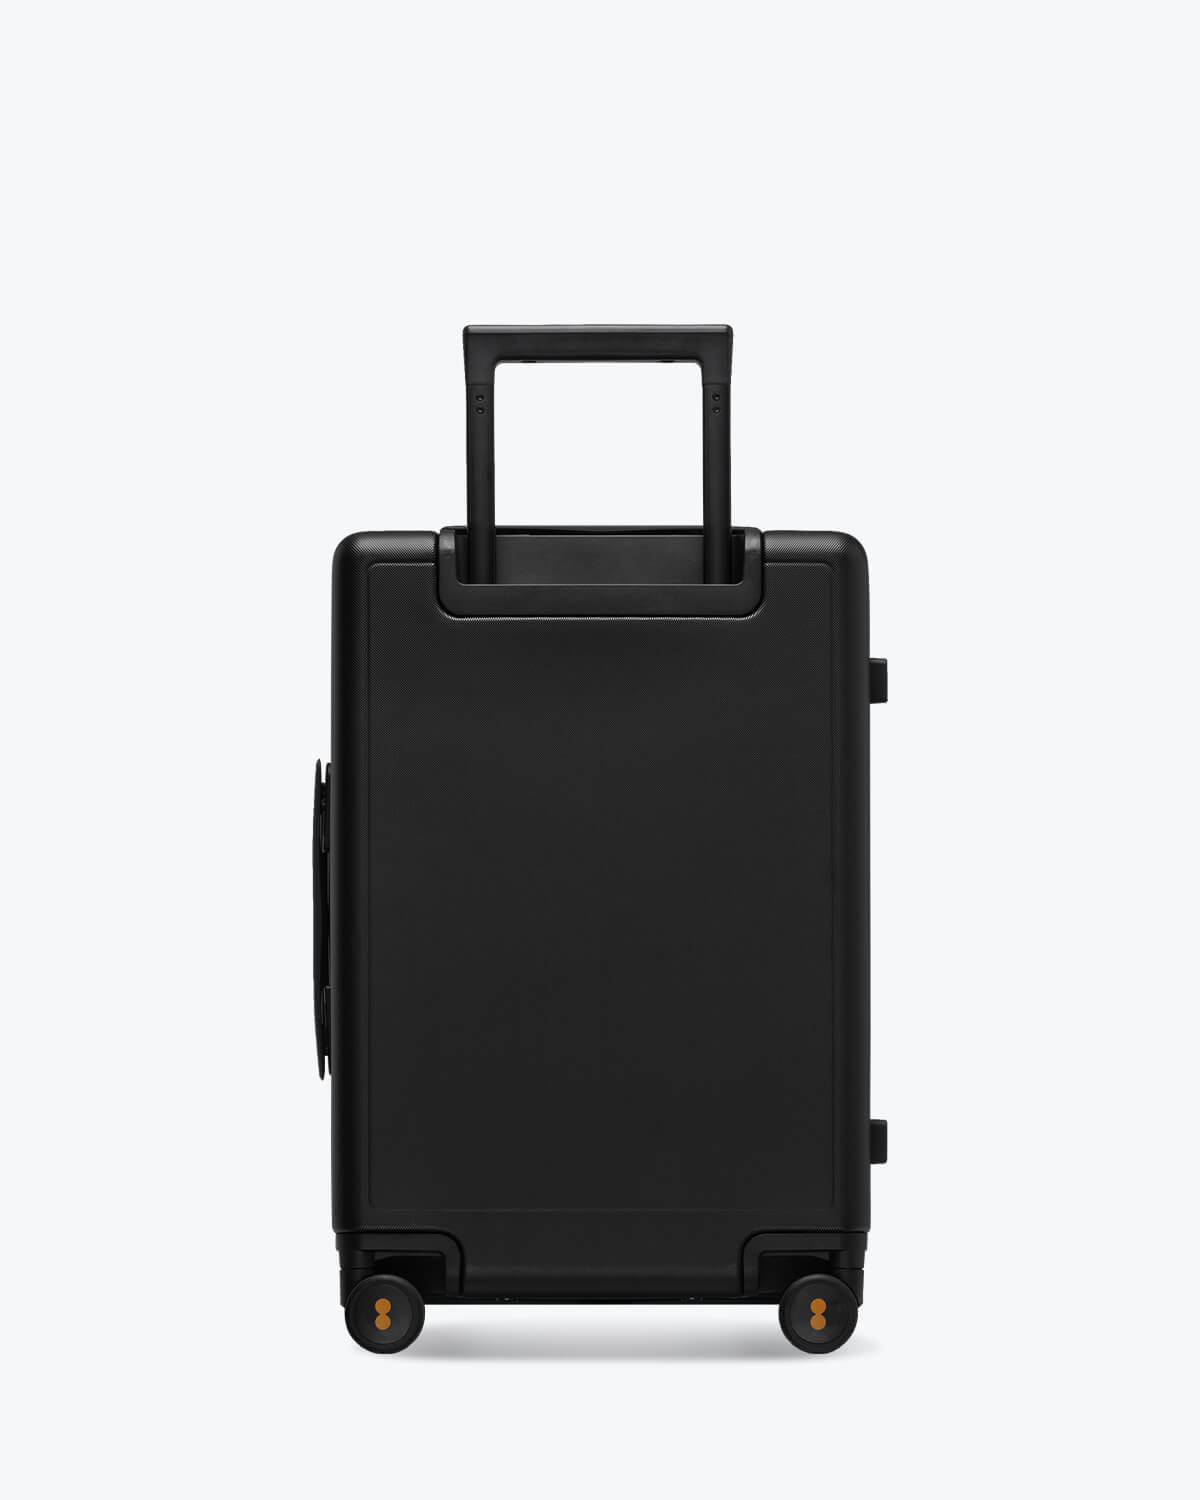 Waterproof Hard Case Storage TSA Lock 15.6'' Laptop Backpack Business  Travel Bag